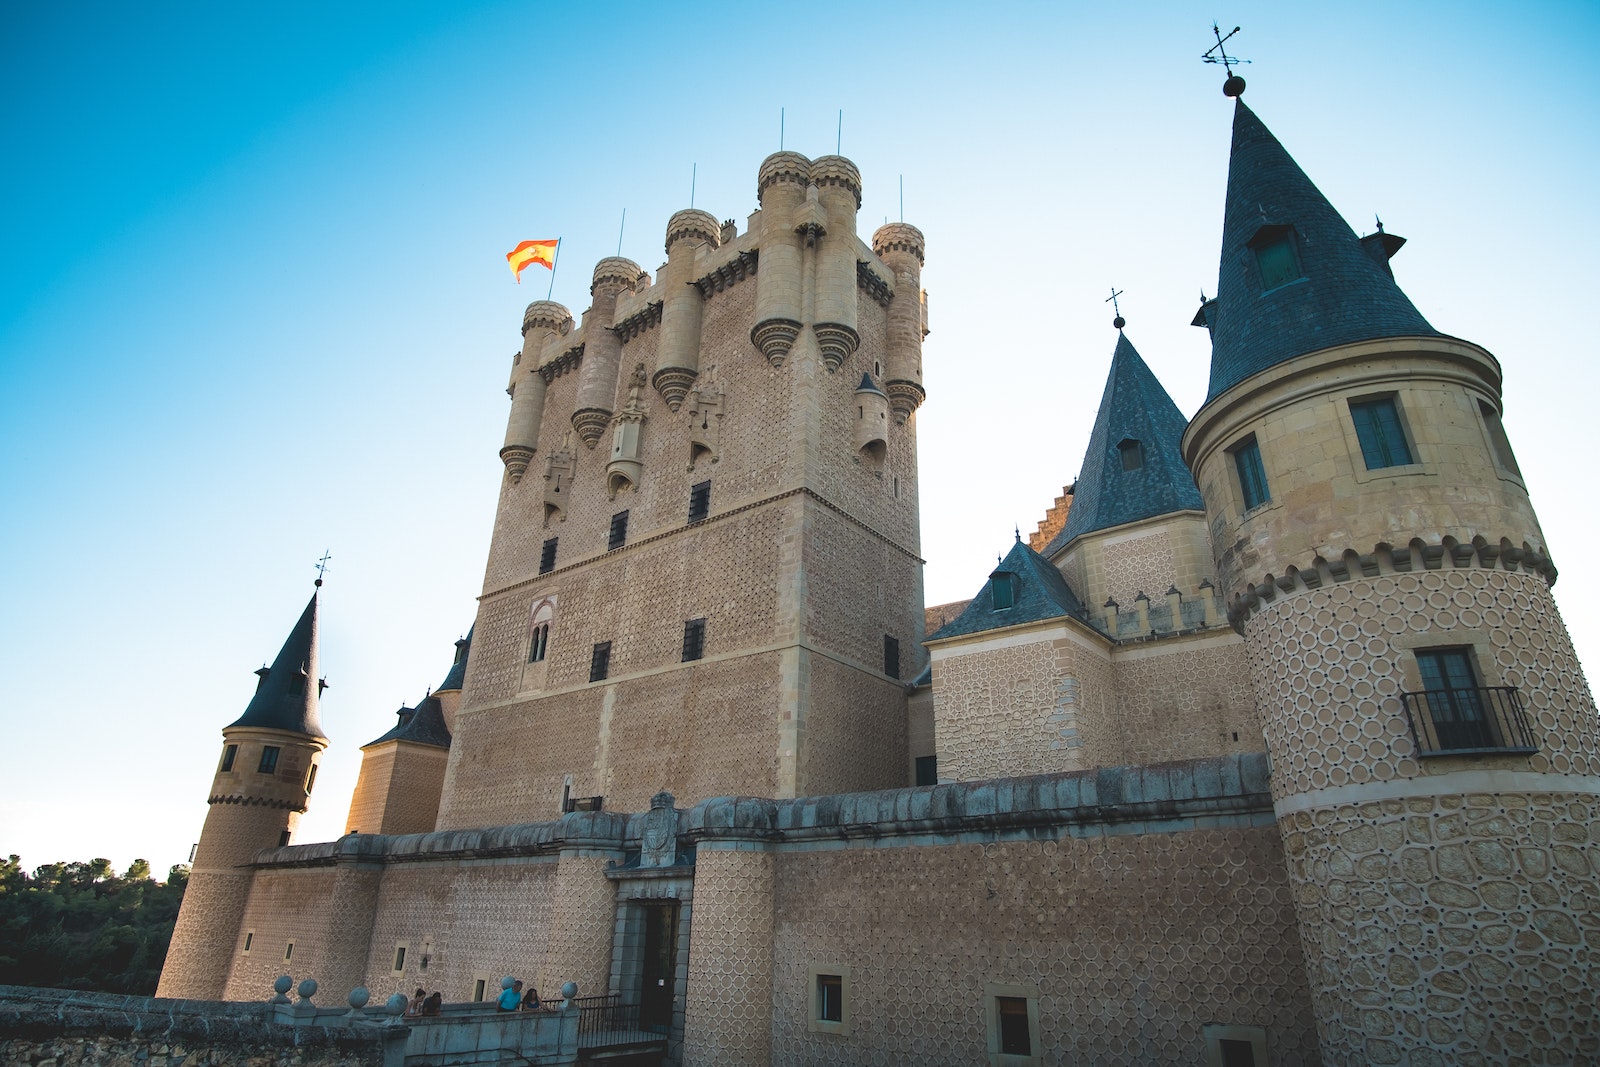 The Alcazar de Segovia Medieval Castle in Spain